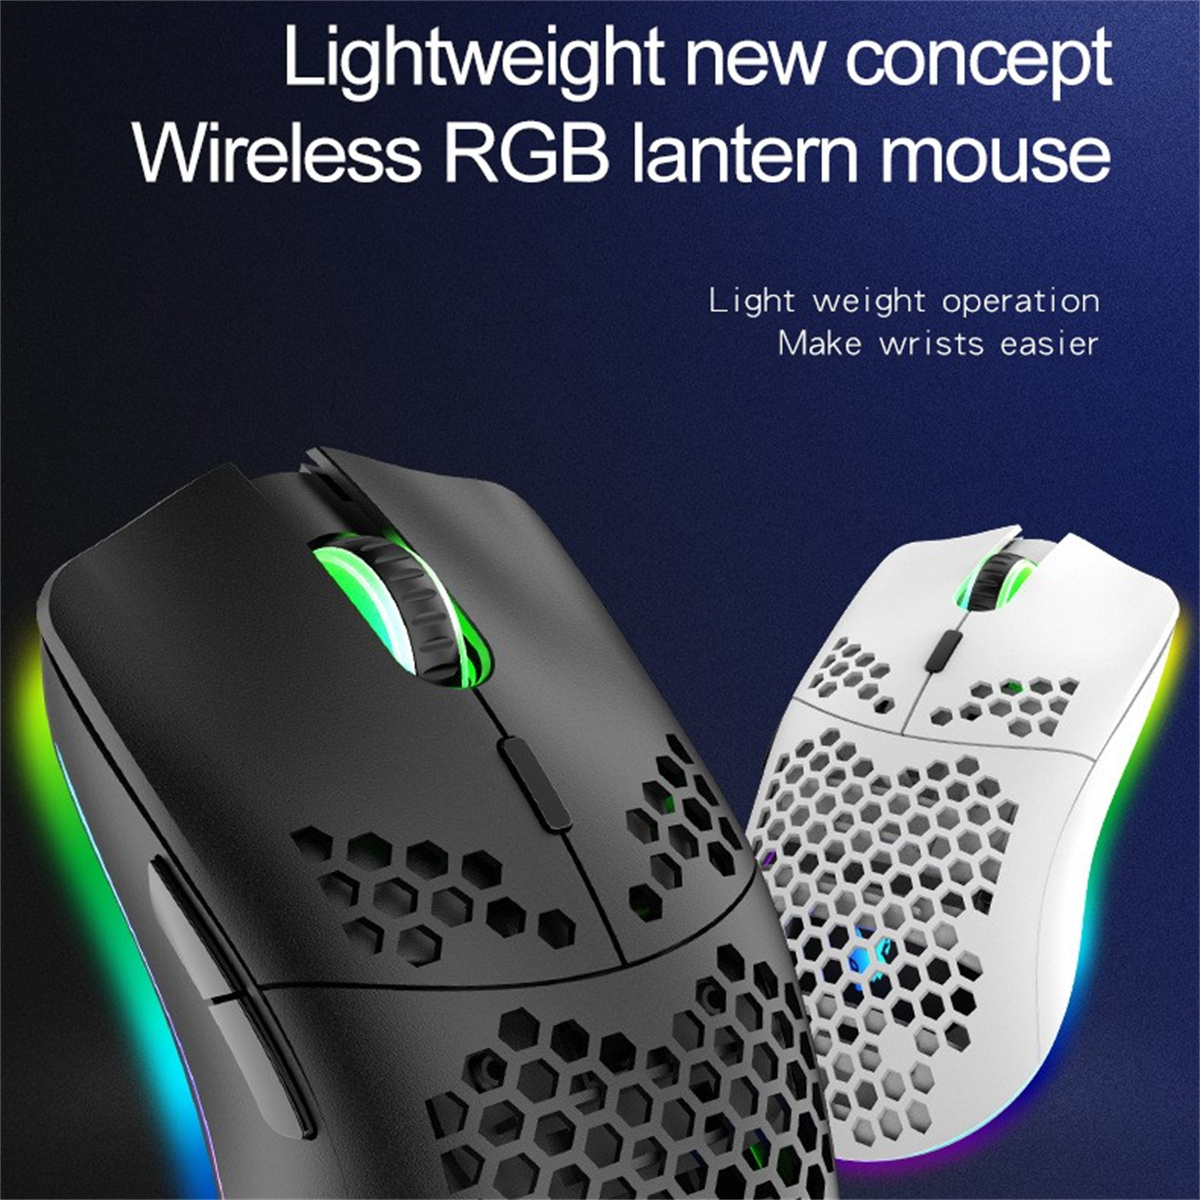 SYNTEK Maus Beleuchtet weiß Maus Büro Kabellos Maus, Computer Wiederaufladbar Weiß